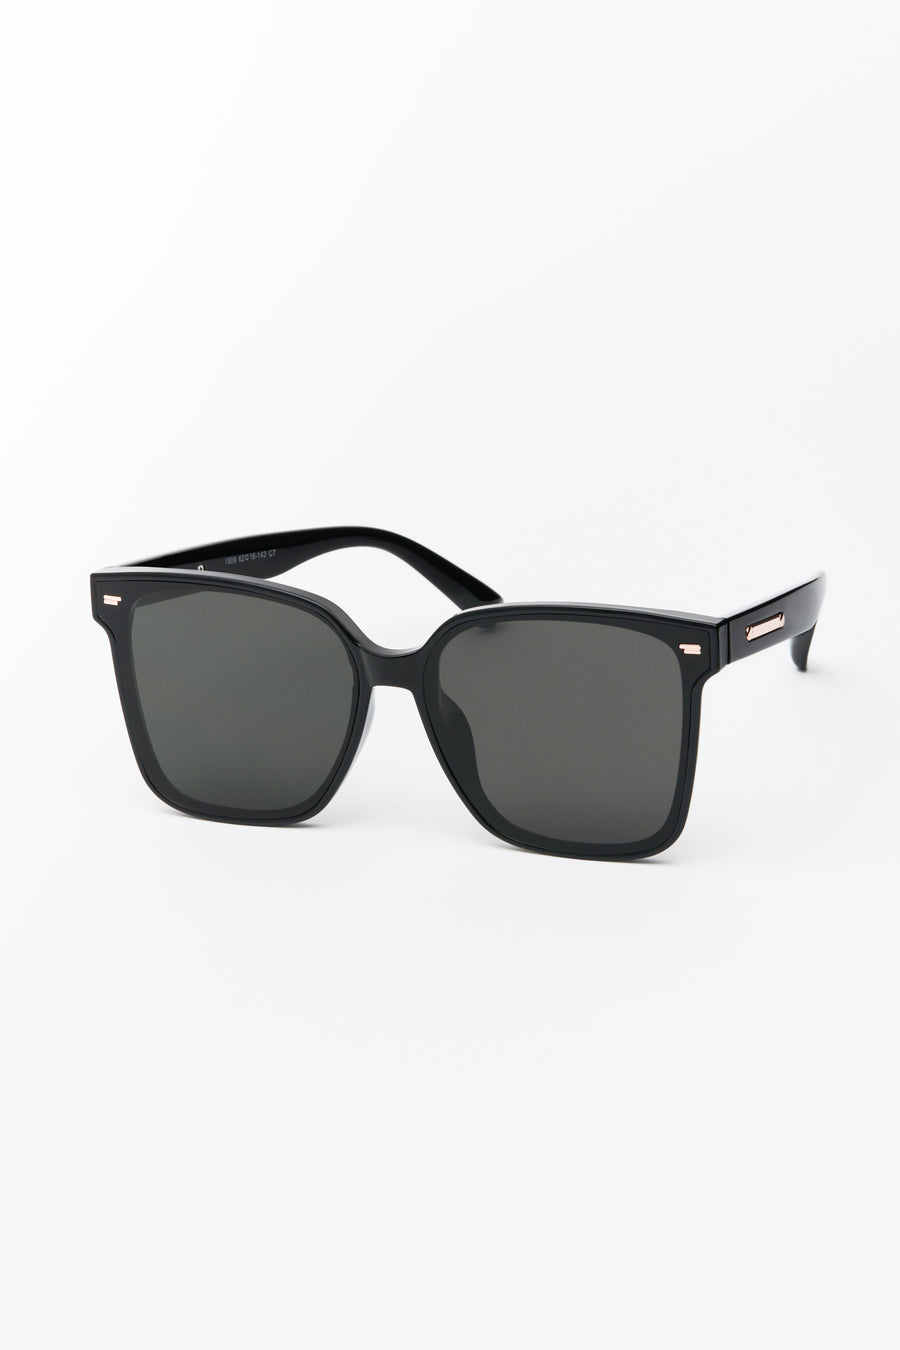 Cher Sunglasses Black/Smoke Lens